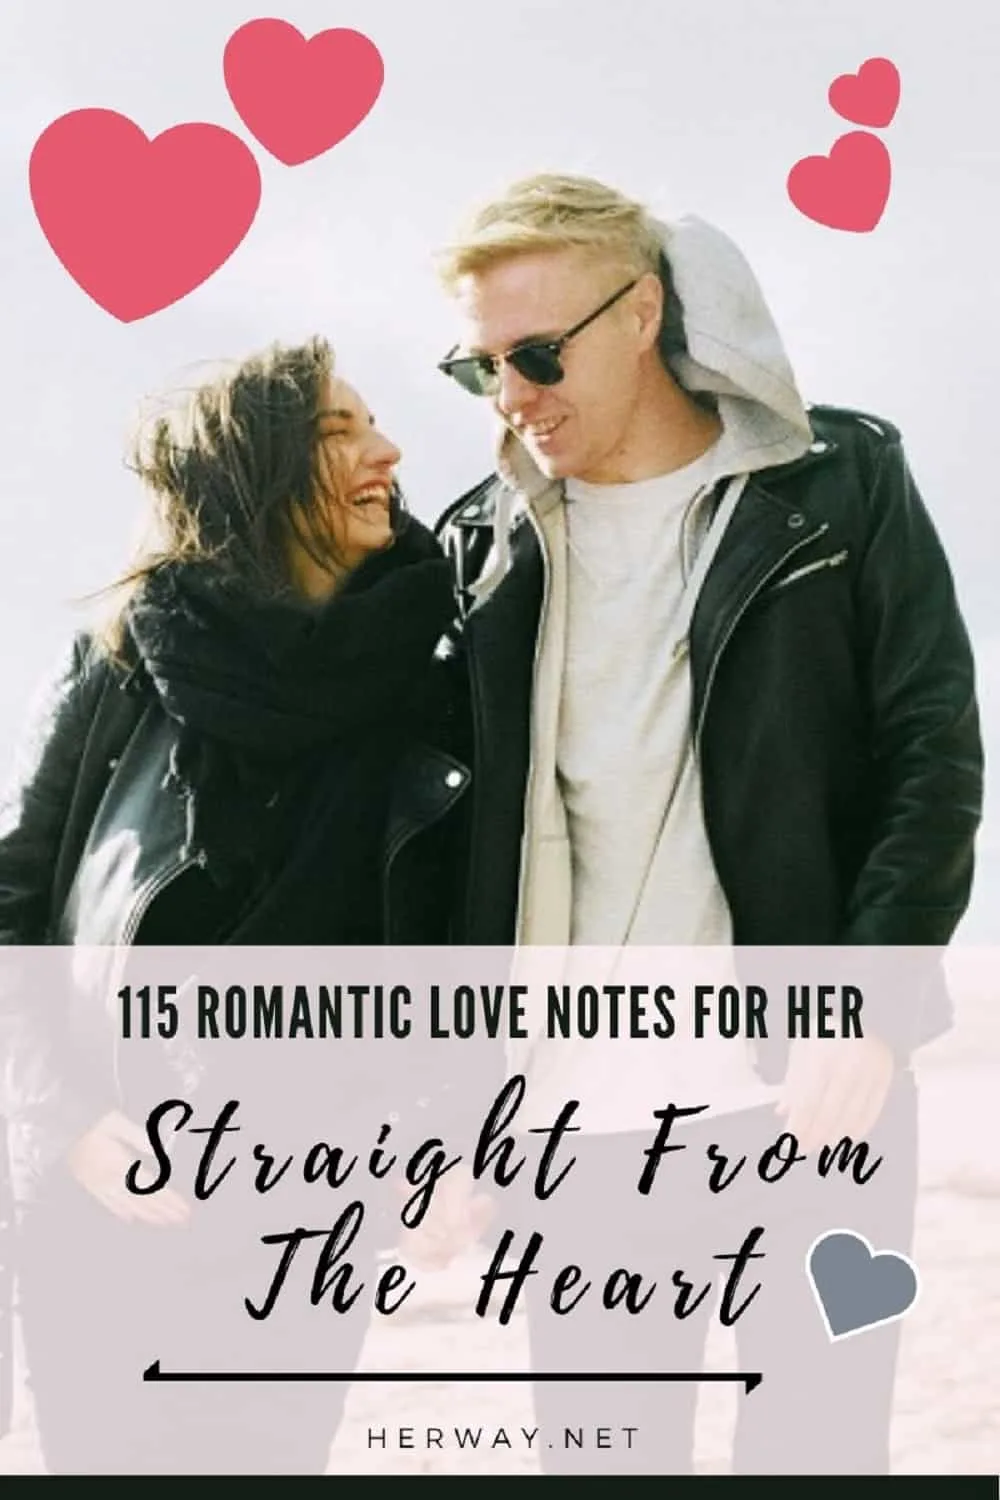 Love notes nice 147+ Romantic